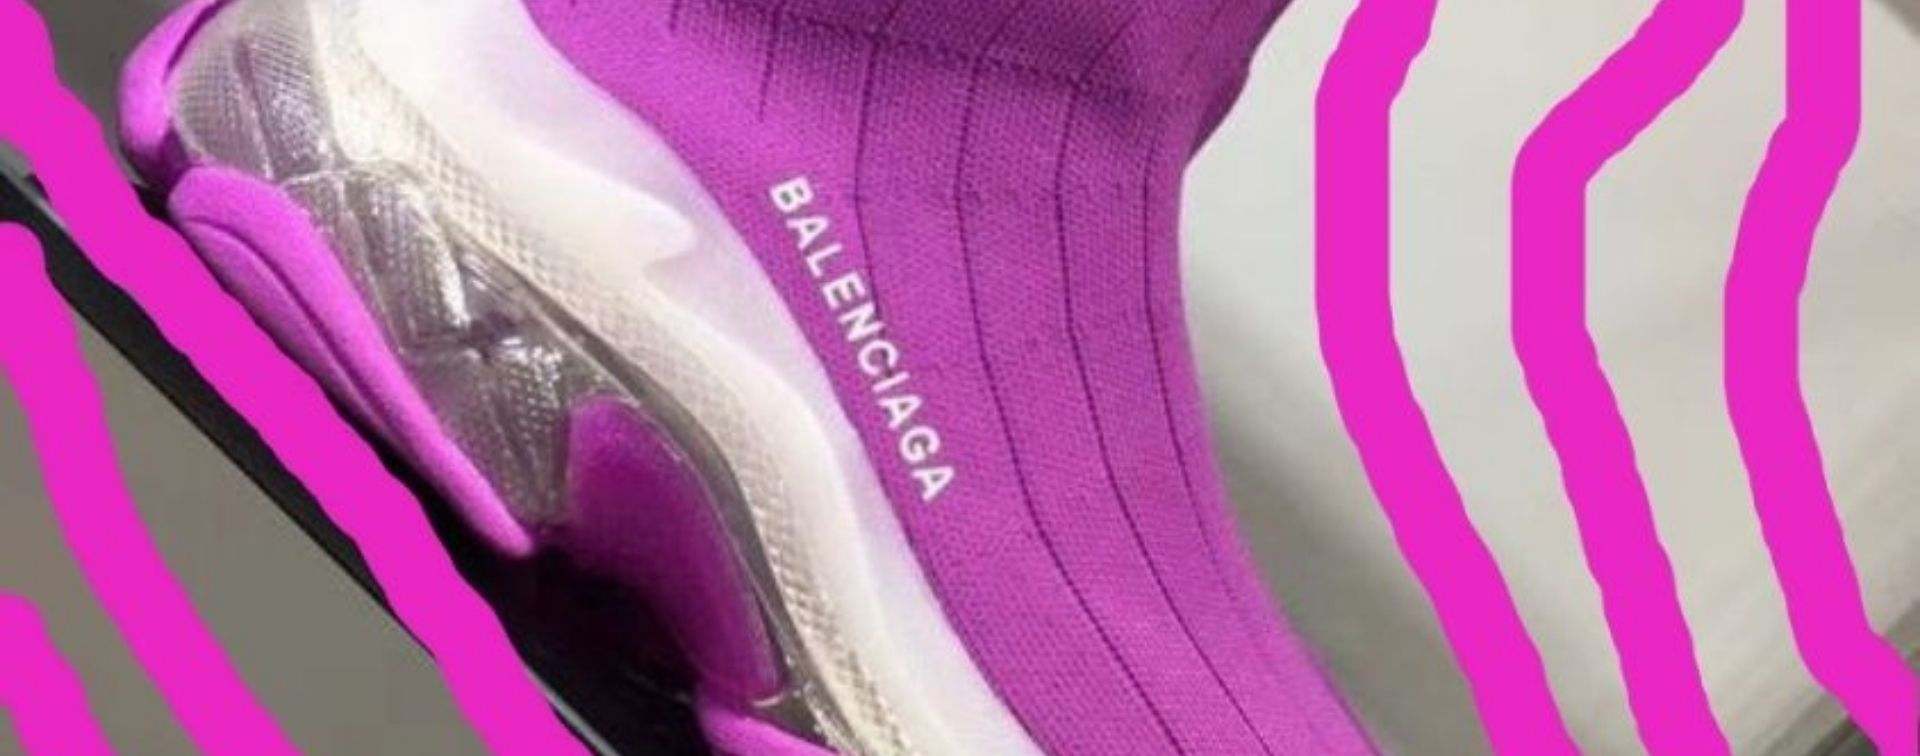 Will you wear Belanciaga's 